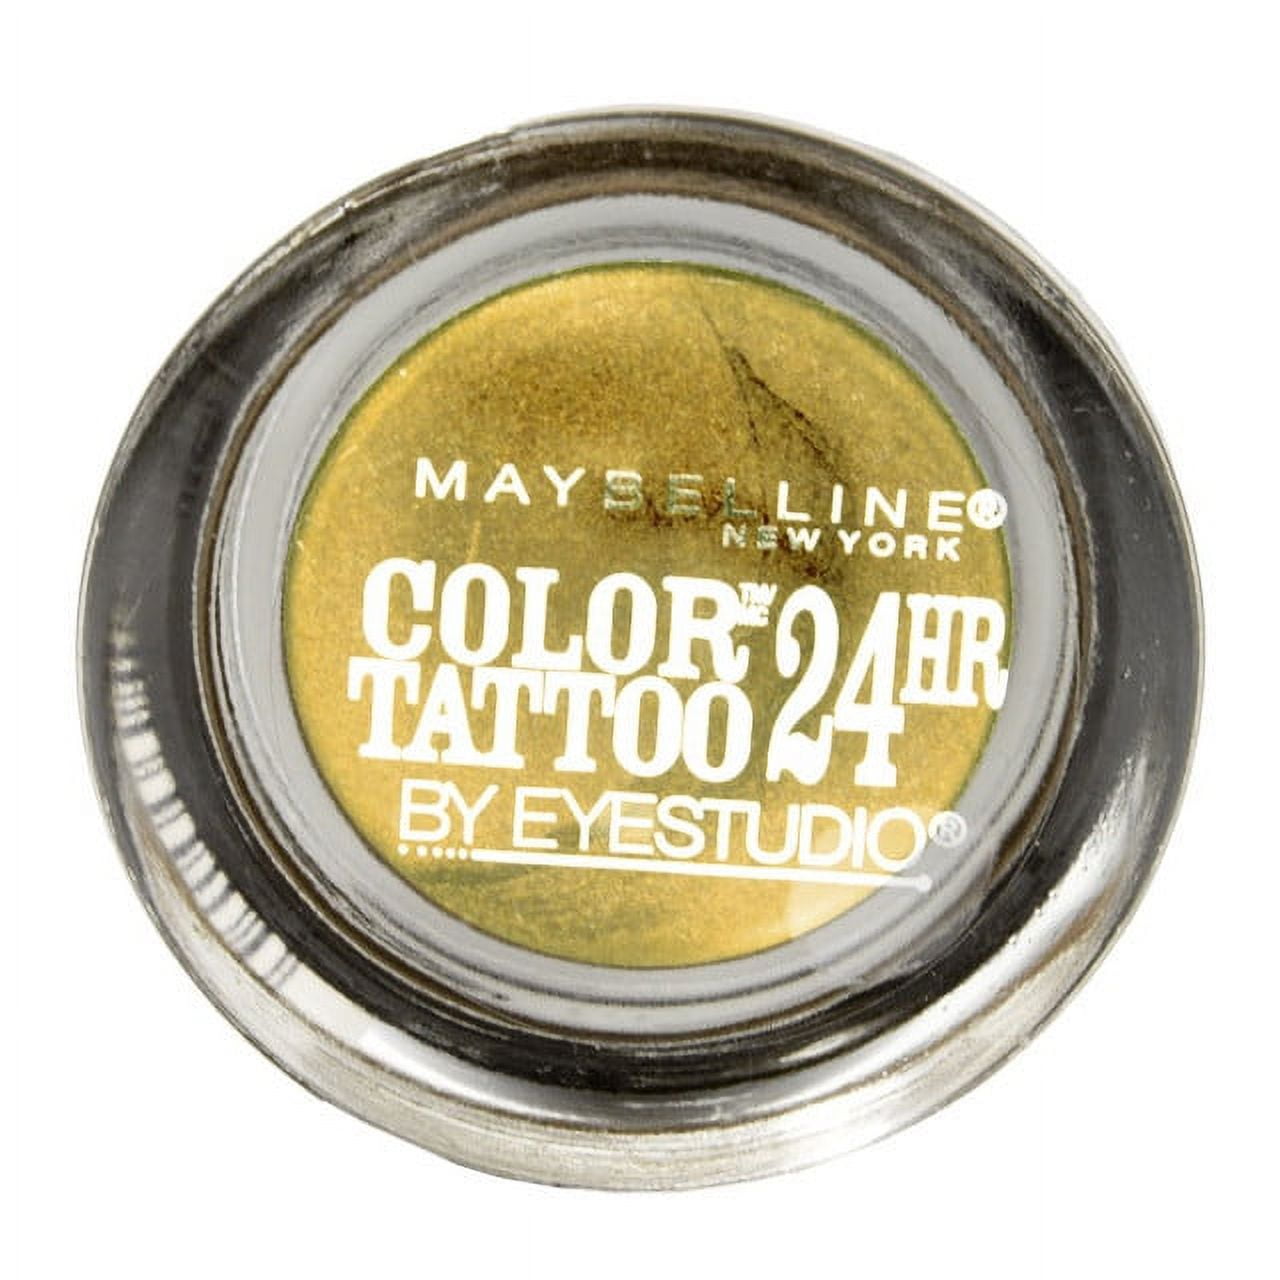 Maybelline Eye Studio Gold Eye - Tattoo Rush Color 65 (2-Pack) 24Hr Shadow